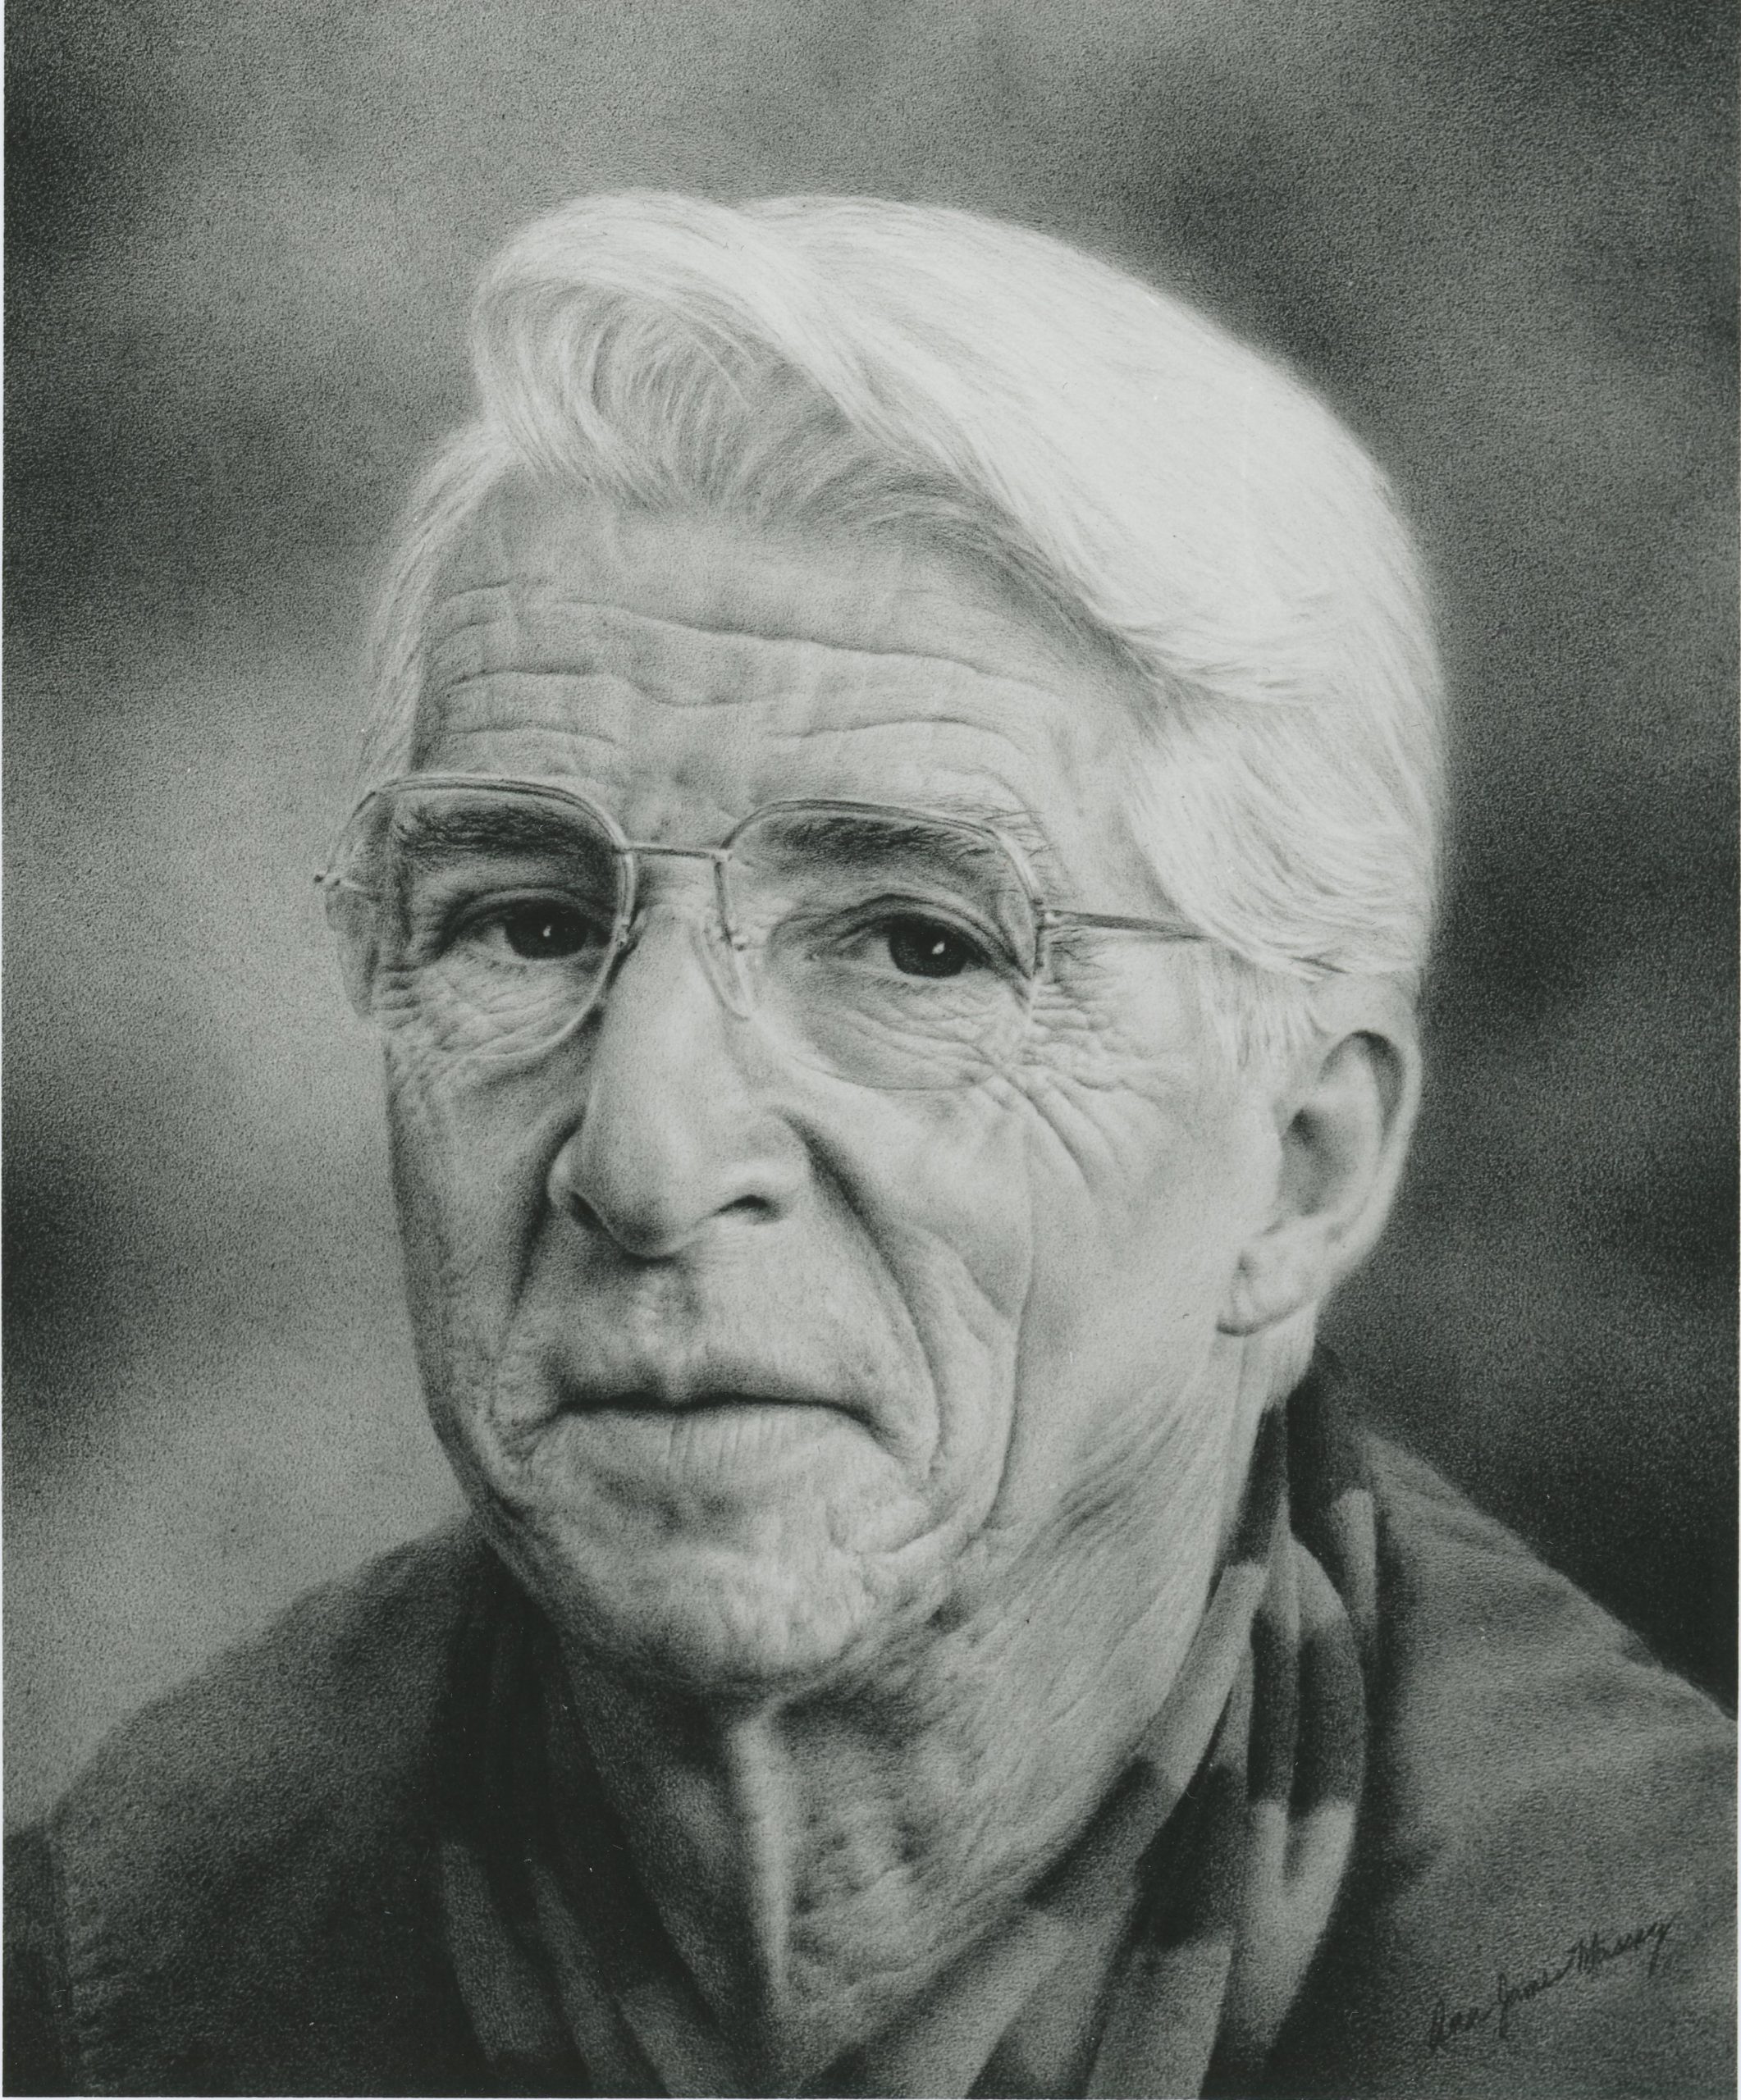 Henri Bérenger © 1995 Ann James Massey
9.5in x 7.5in | 34.3cm x 24.1cm
Black Prismacolor wax pencil on bristol paper
Collection of the artist